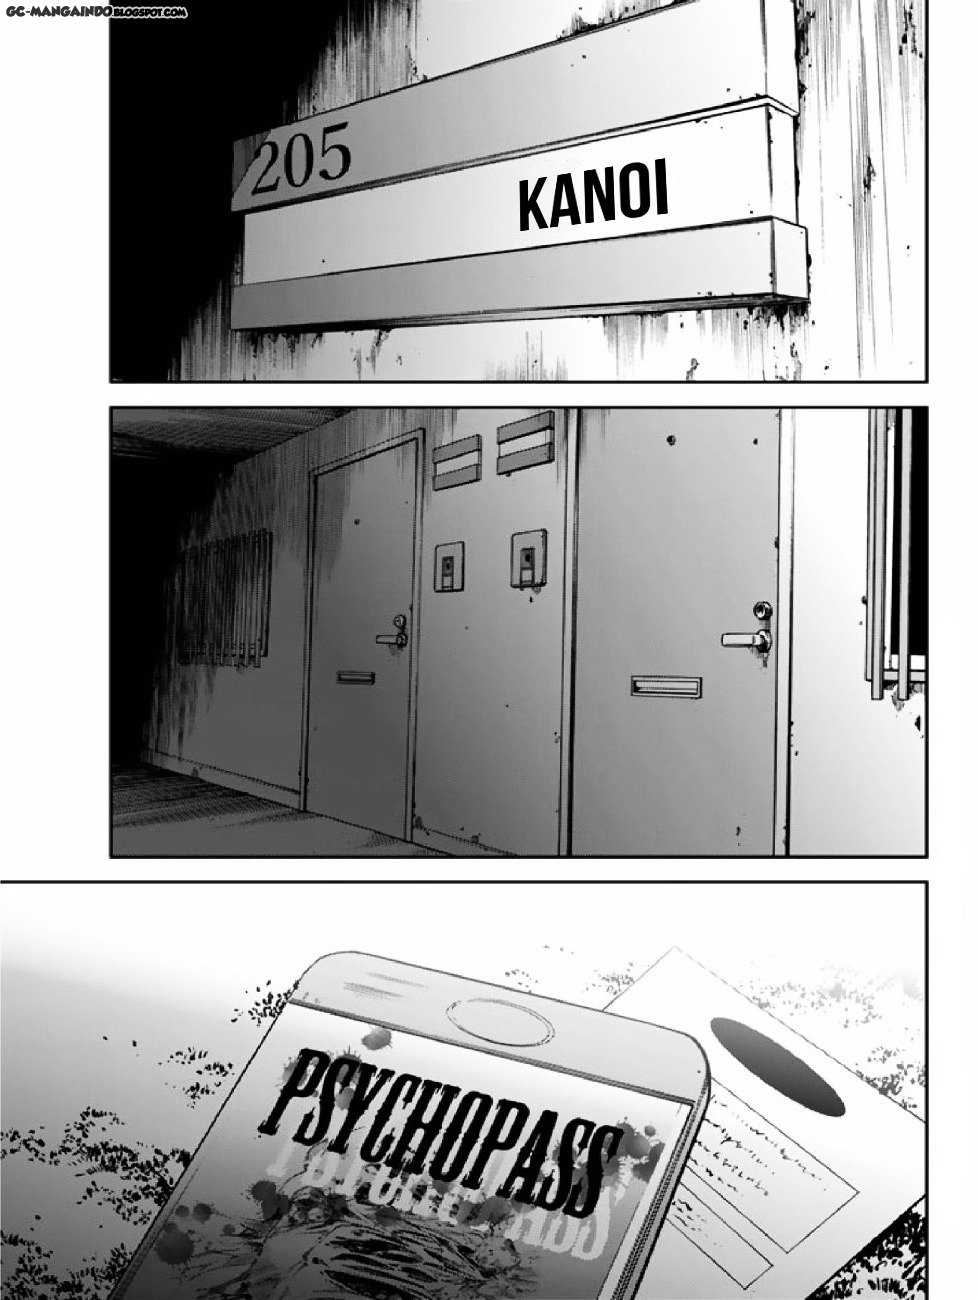 Kanojo wa Rokurokubi Chapter 5